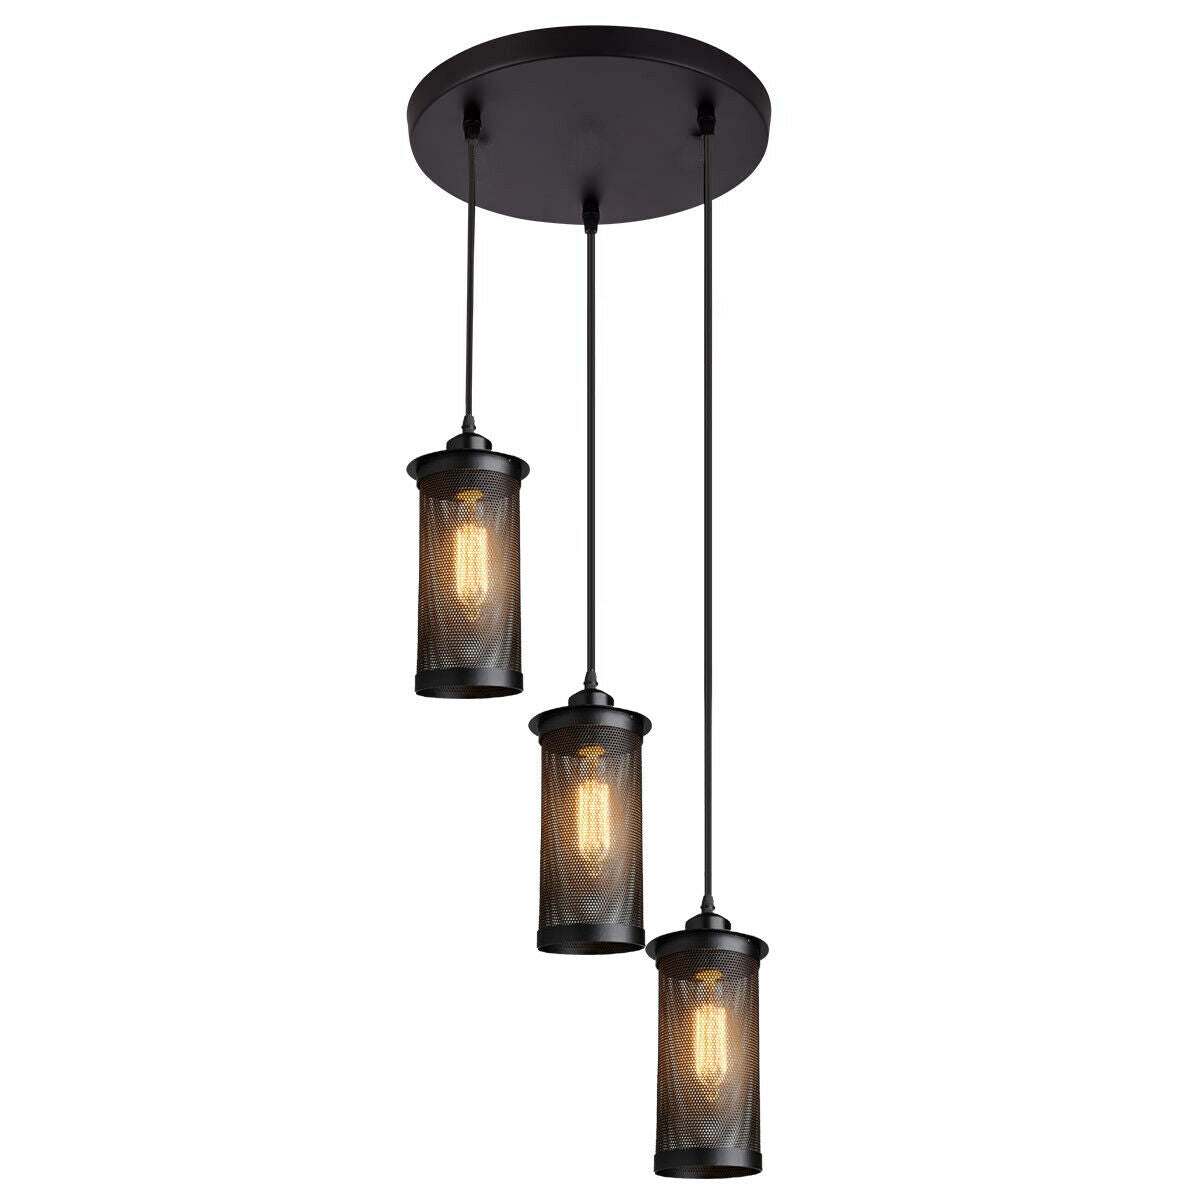 Modern Vintage Industrial Retro Loft Cluster Ceiling Lamp Shade Pendant Light UK~2148 - LEDSone UK Ltd